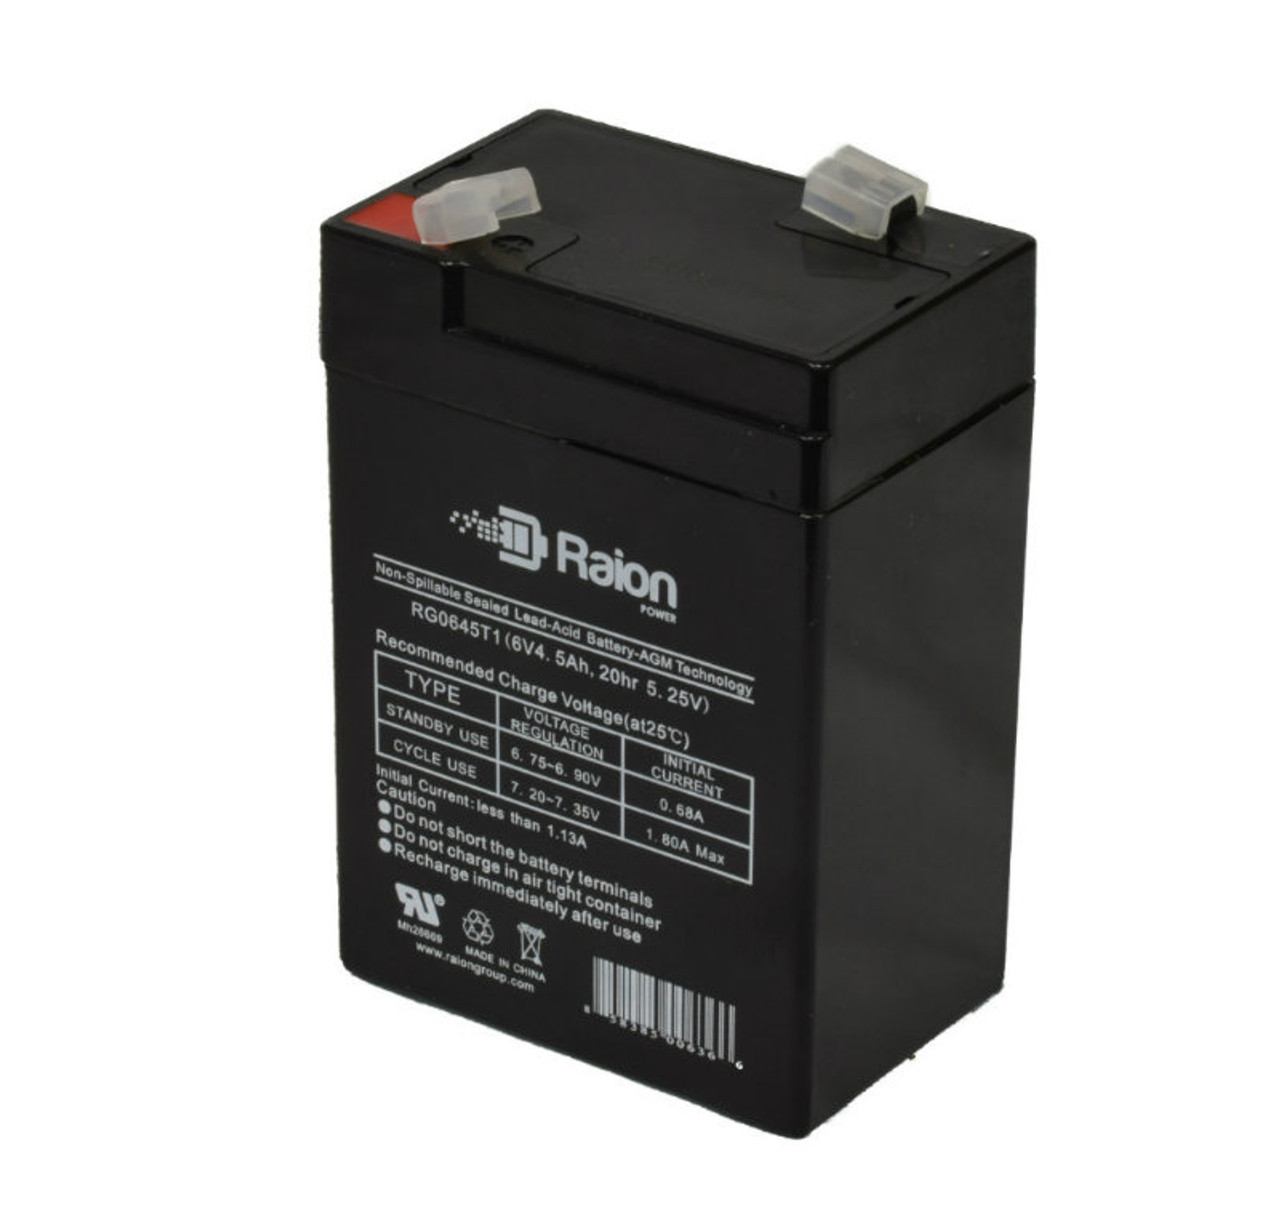 Raion Power RG0645T1 6V 4.5Ah Replacement Battery Cartridge for Avigo AVQUADR Mini Quad Red Racer